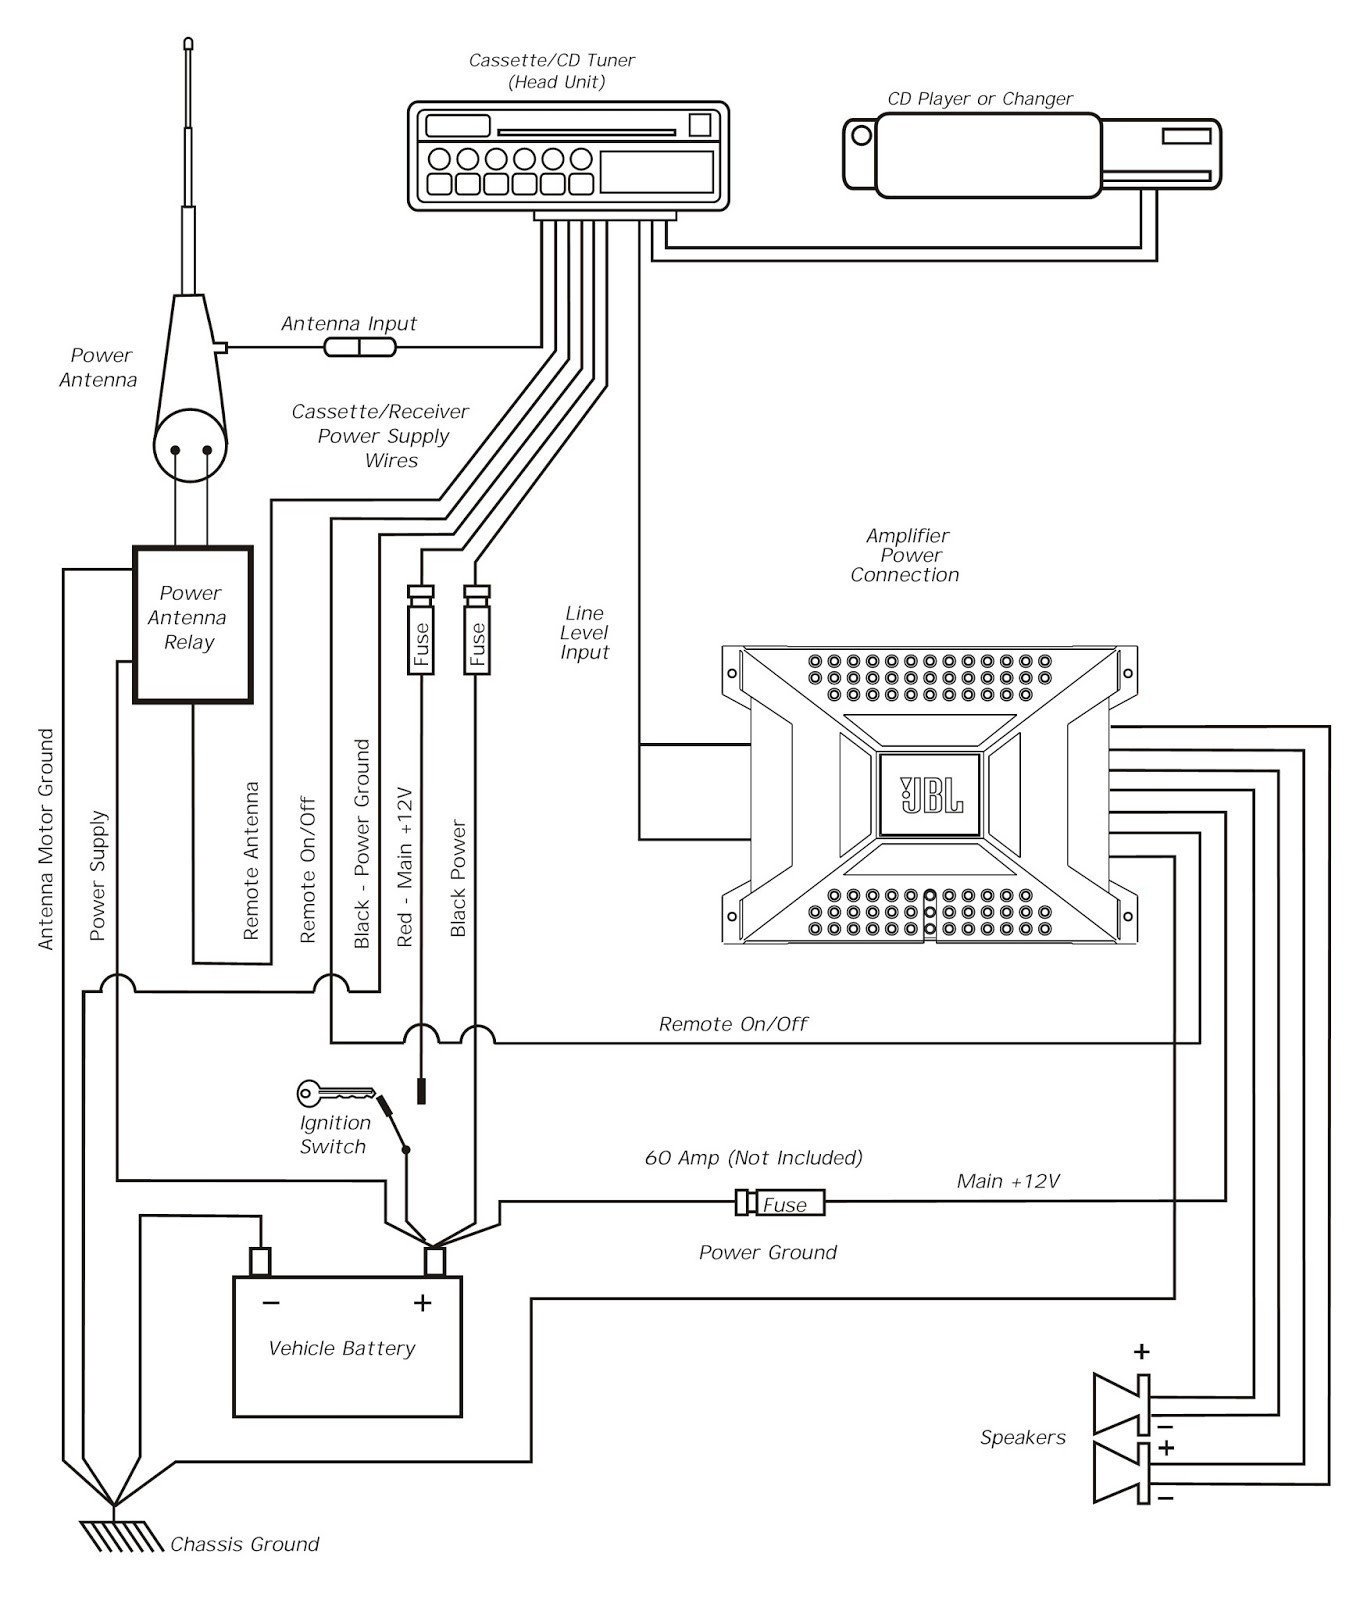 Basic Engine Diagram Car Engine Labeled Diagram Inspirational Engine Parts Diagram with Of Basic Engine Diagram